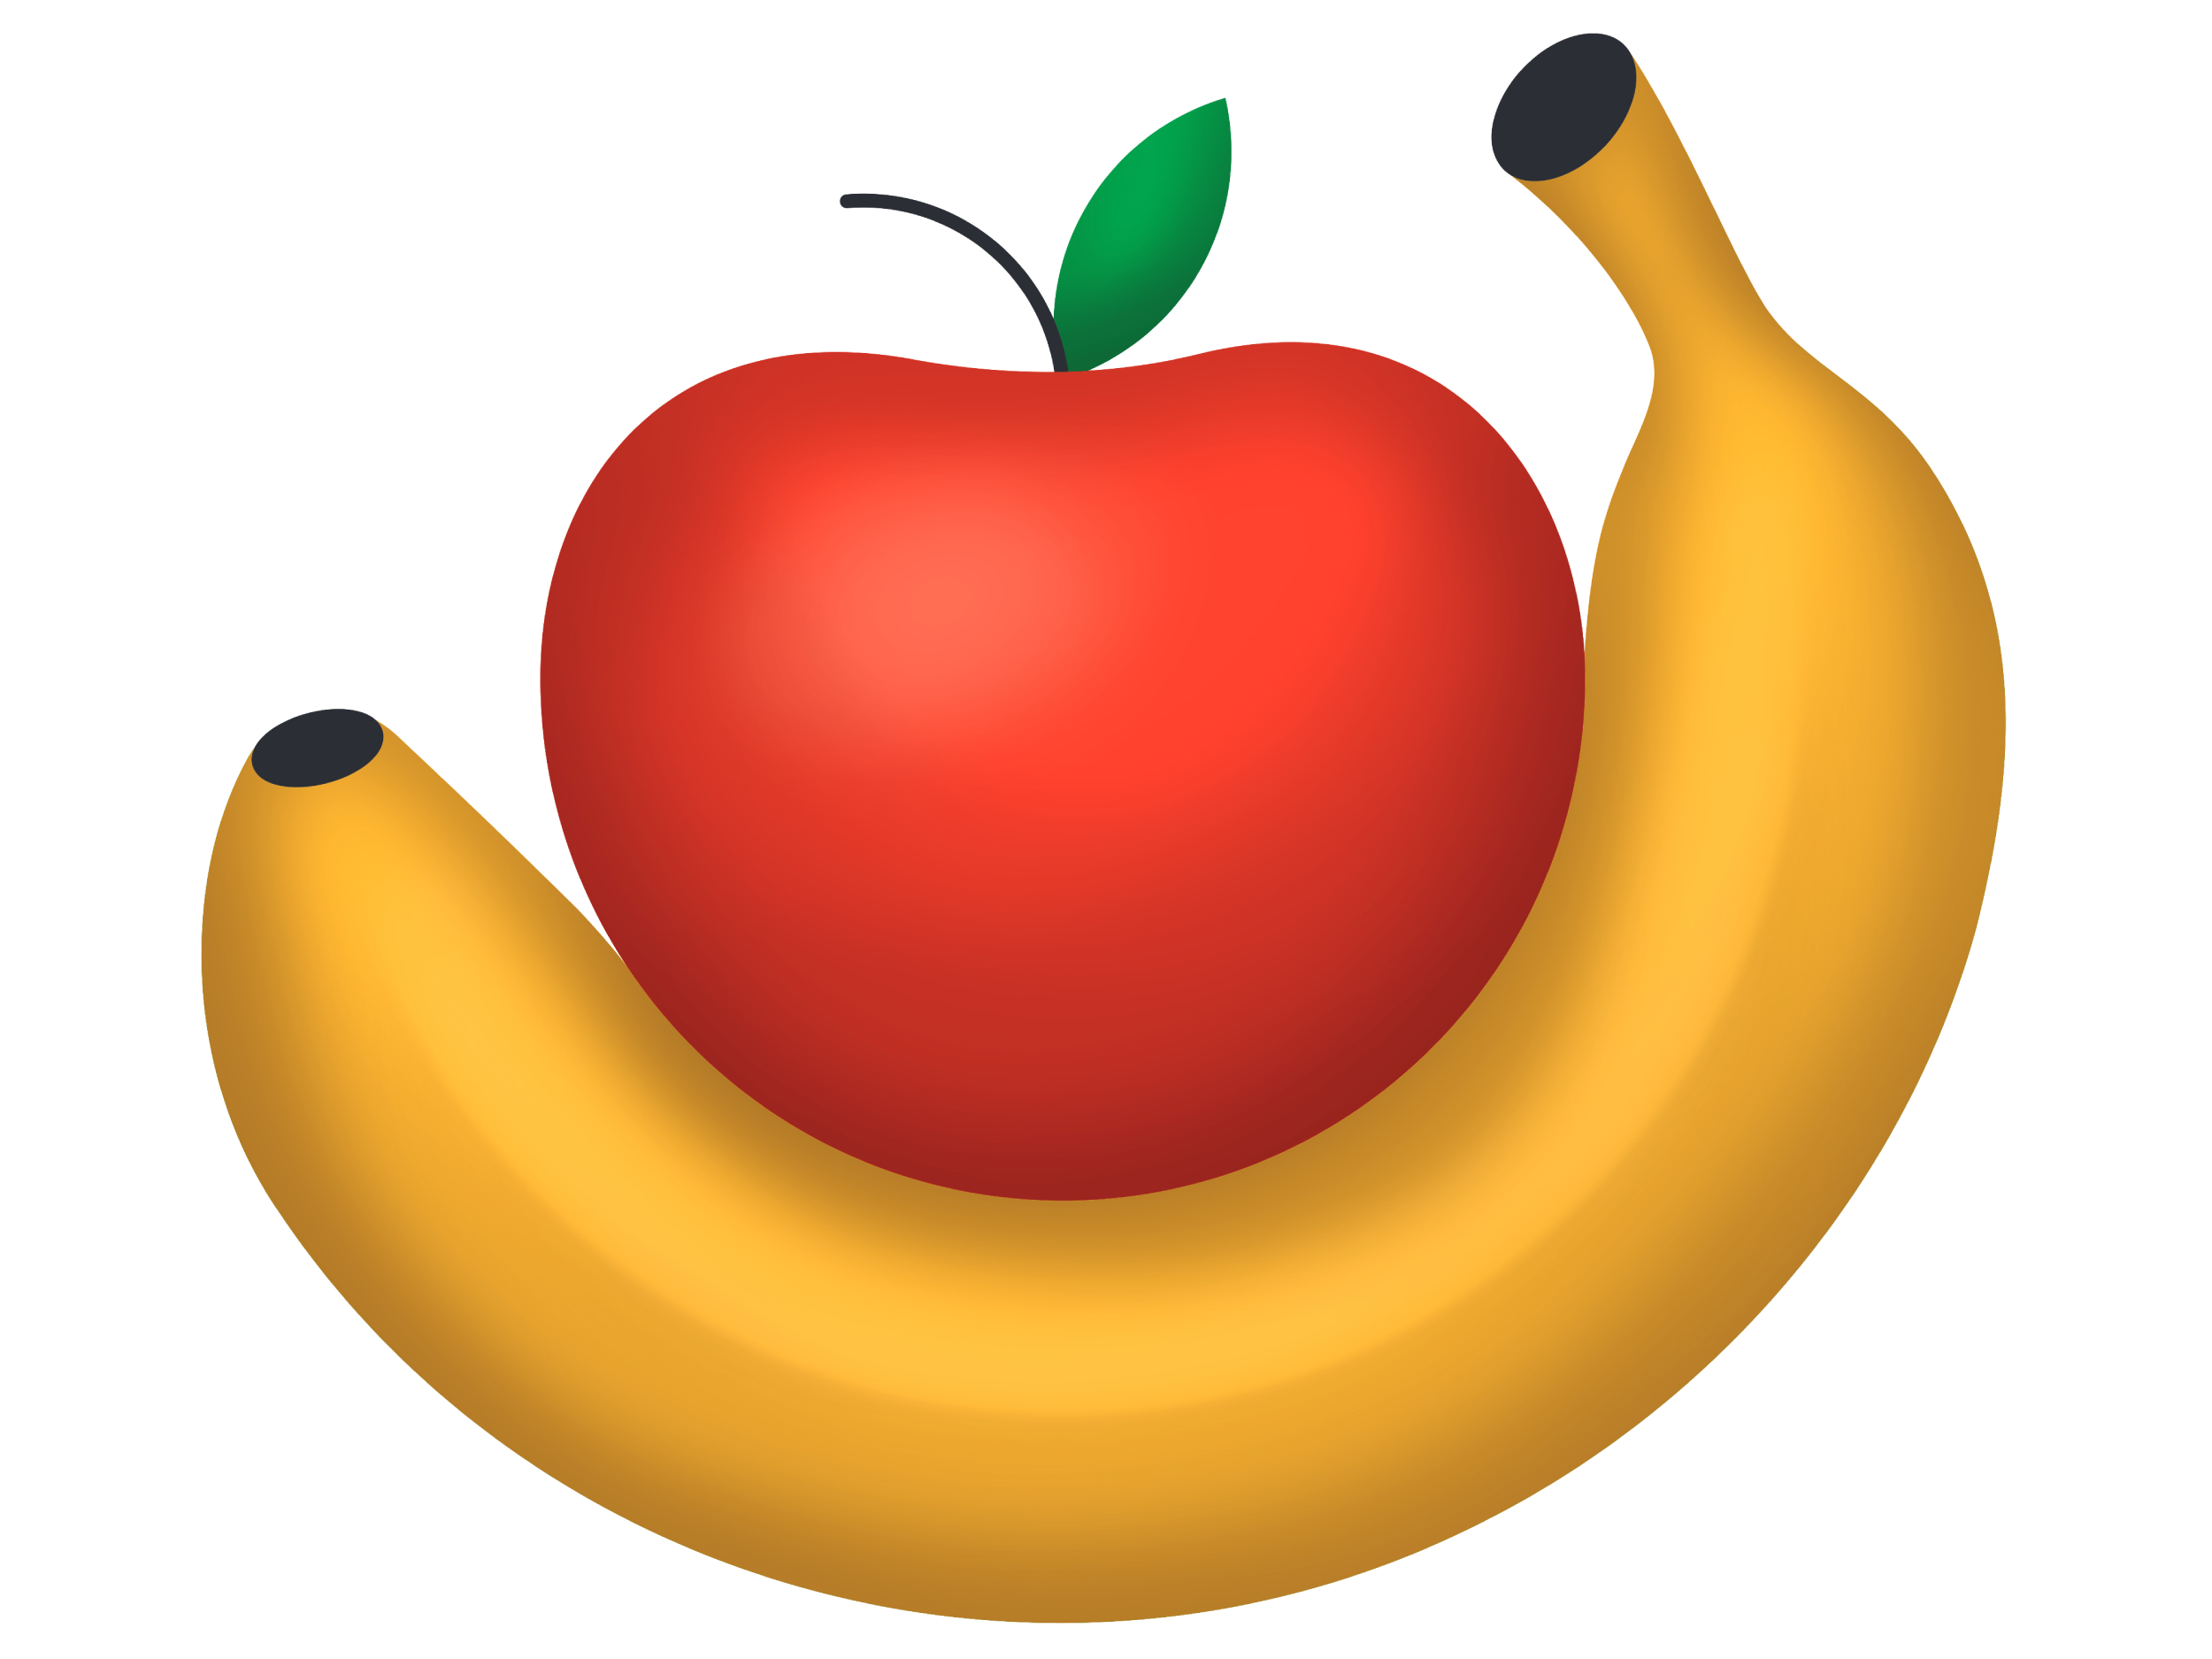 Illustration of fruits